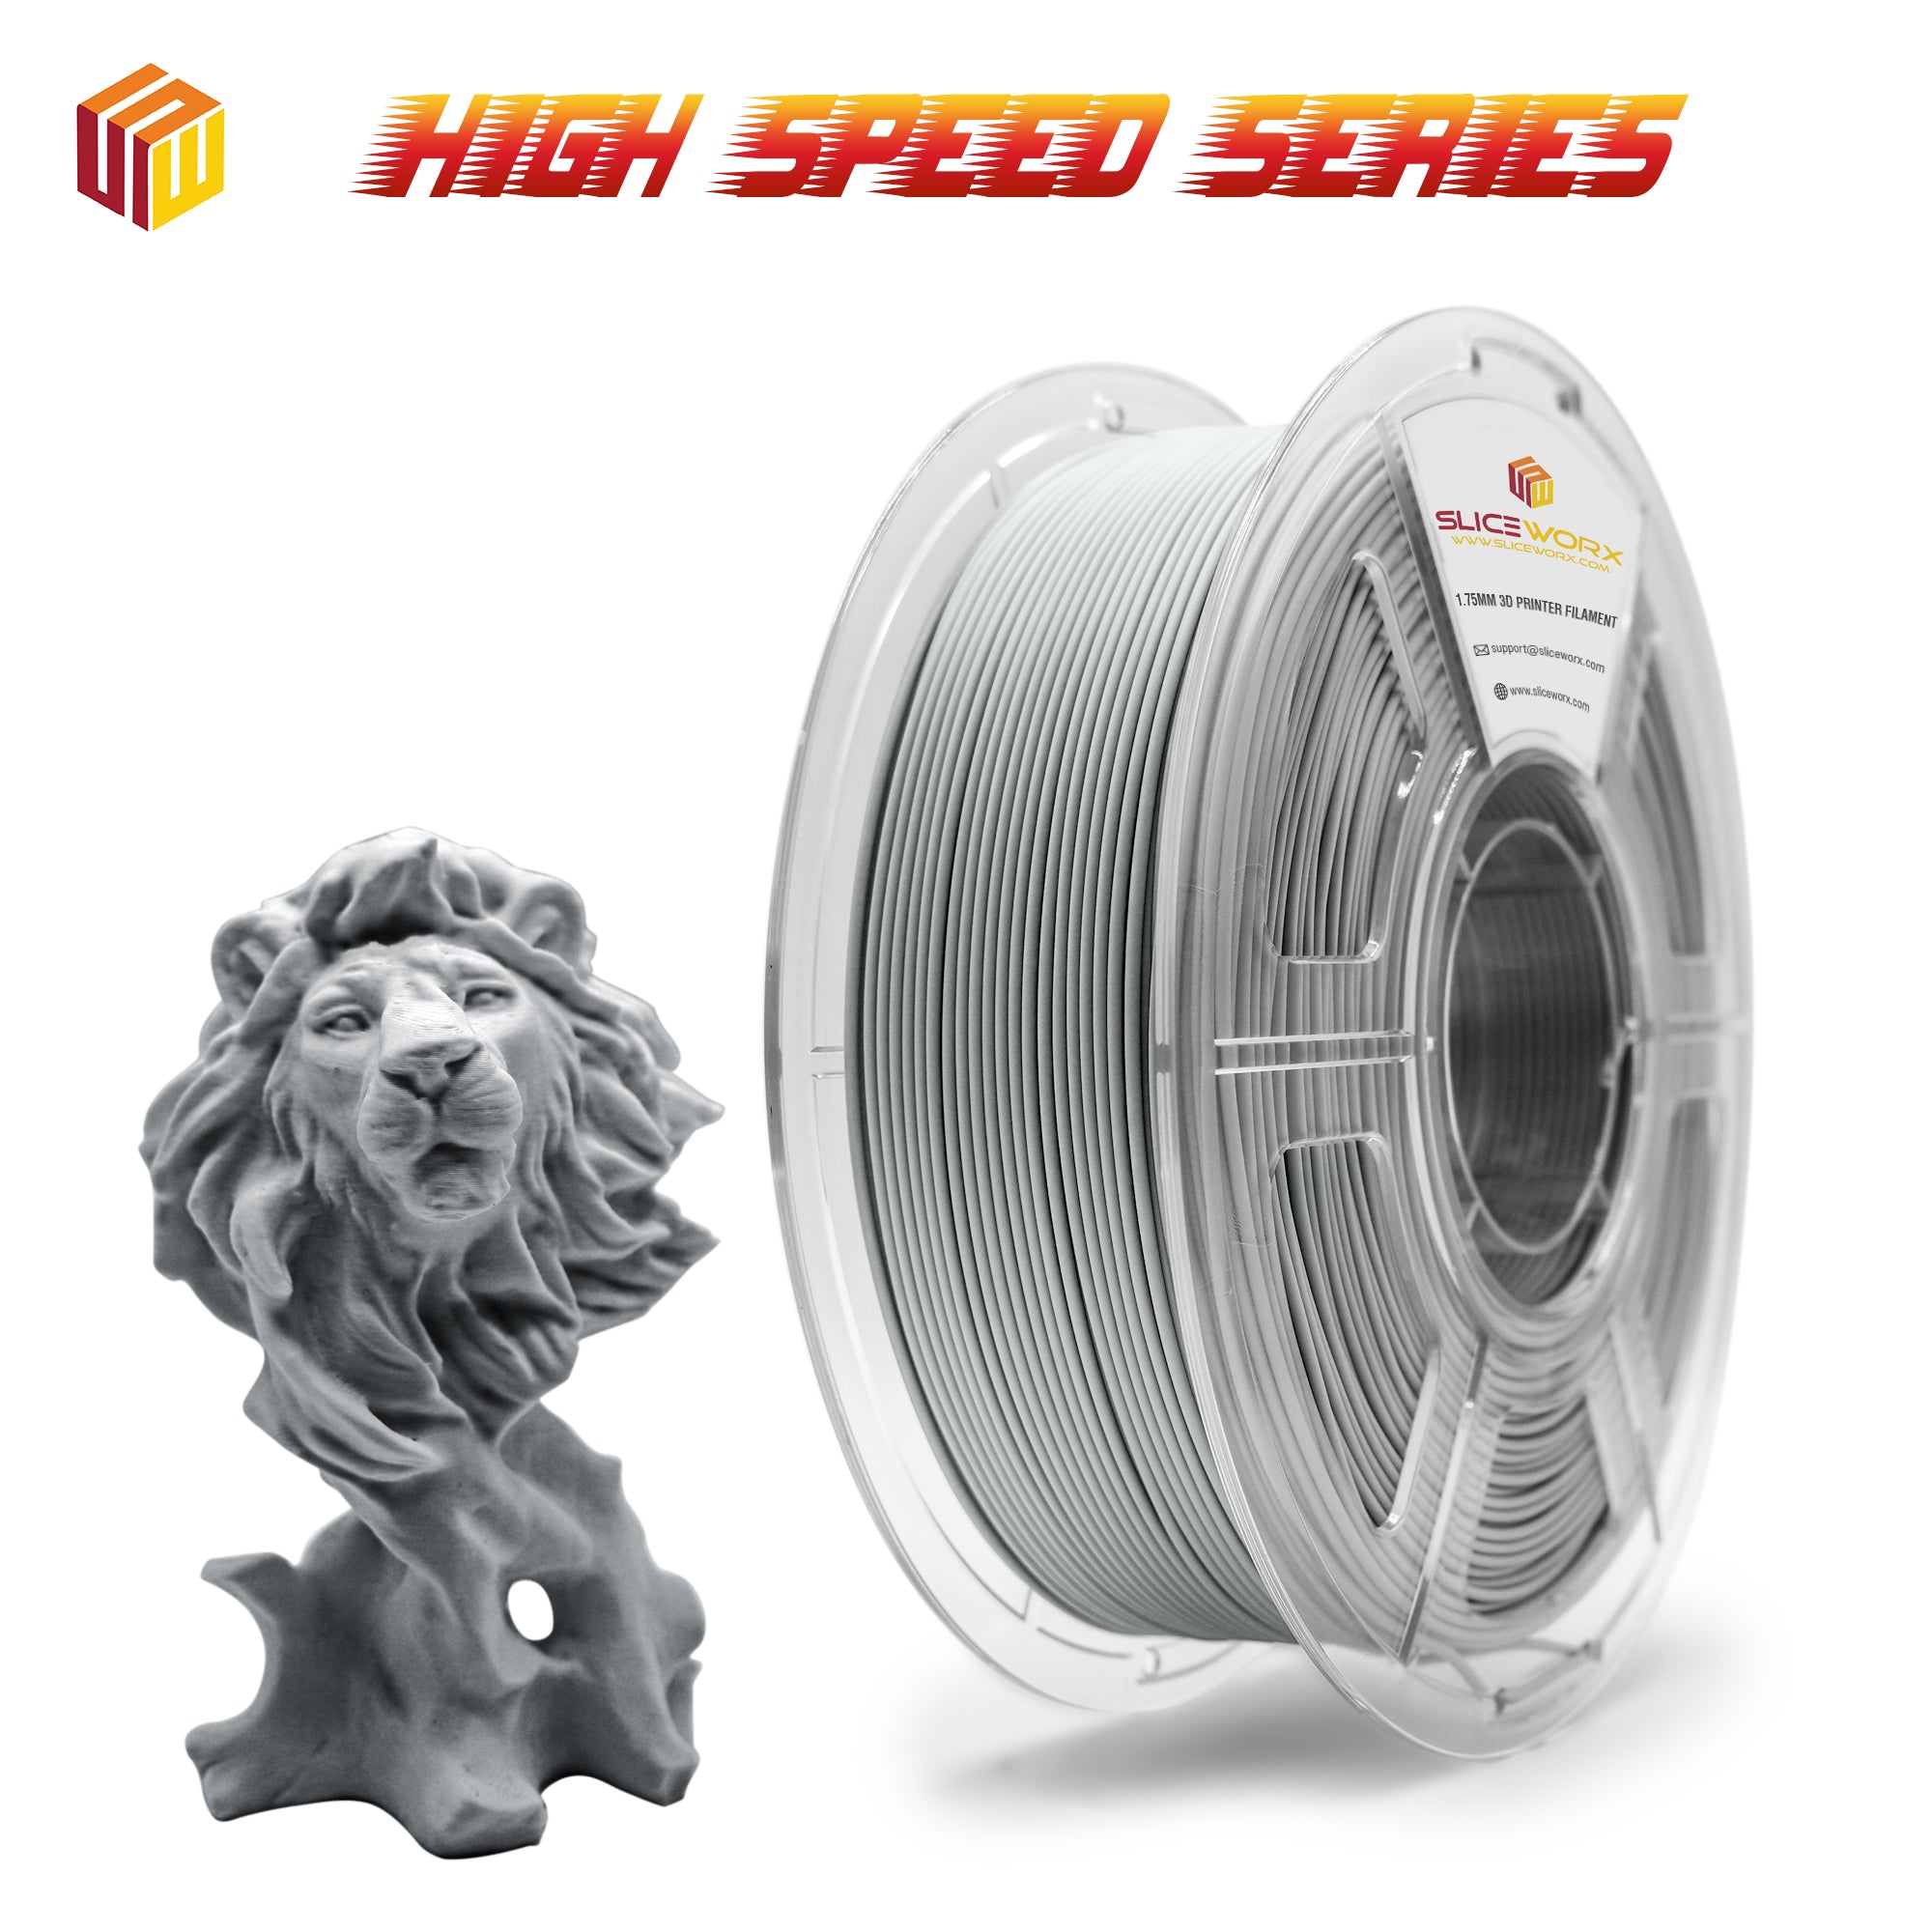 Kingroon HS PLA Filament 1.75mm High Speed 1KG 3D Printer Plastic